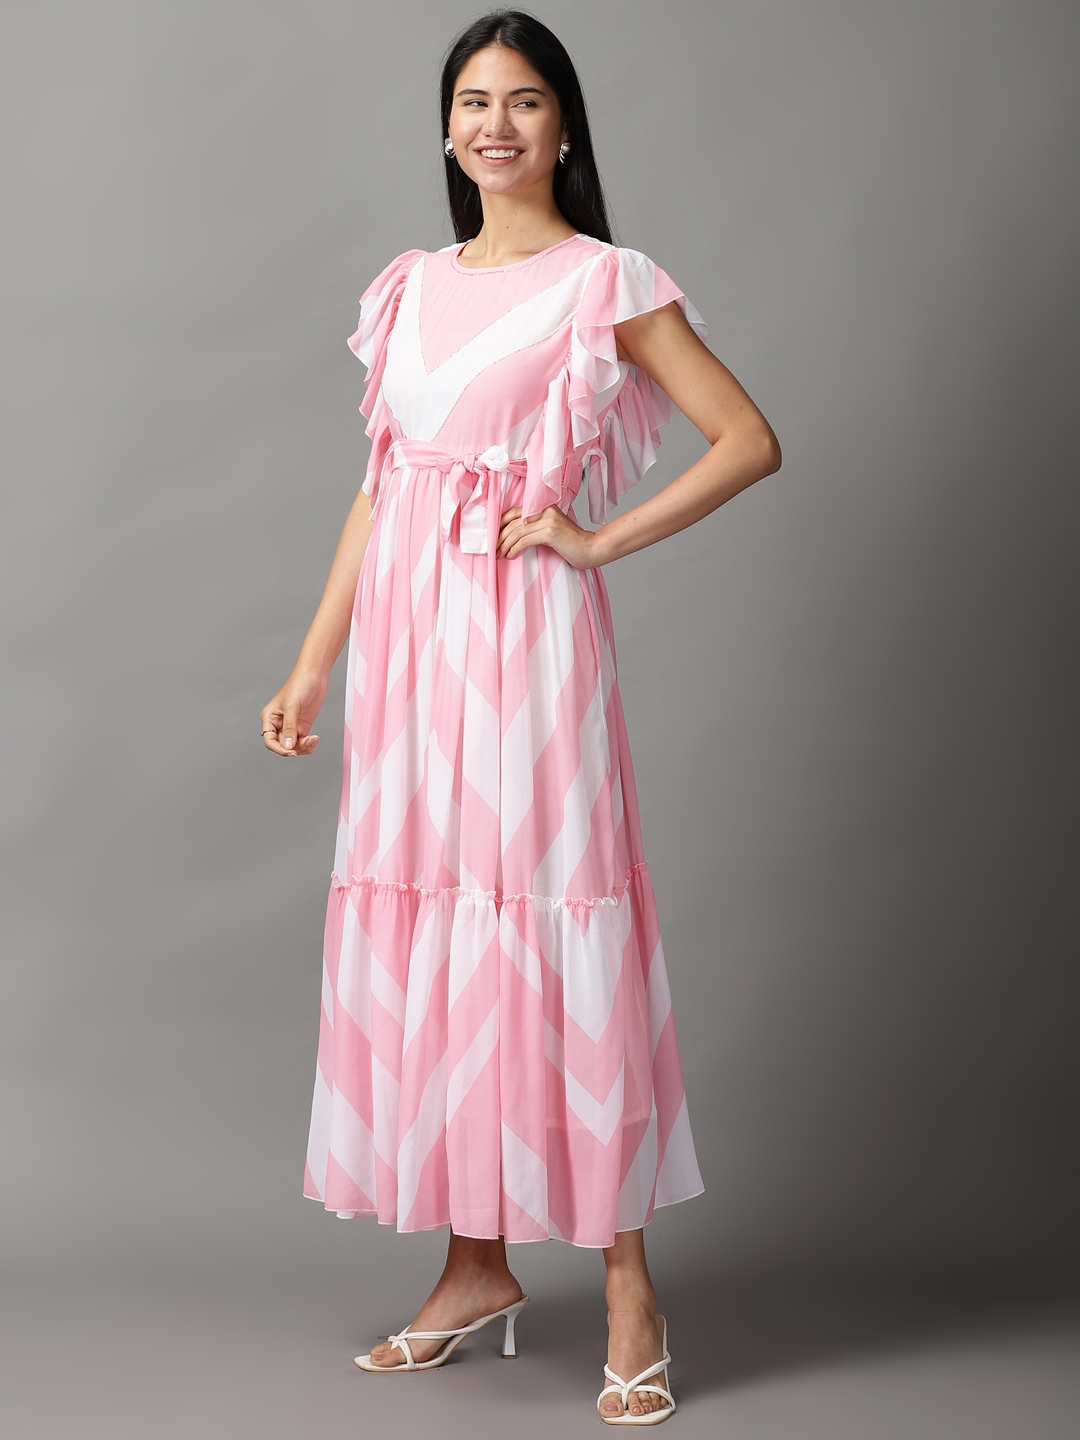 Women's Pink Polyester Chevron Dresses